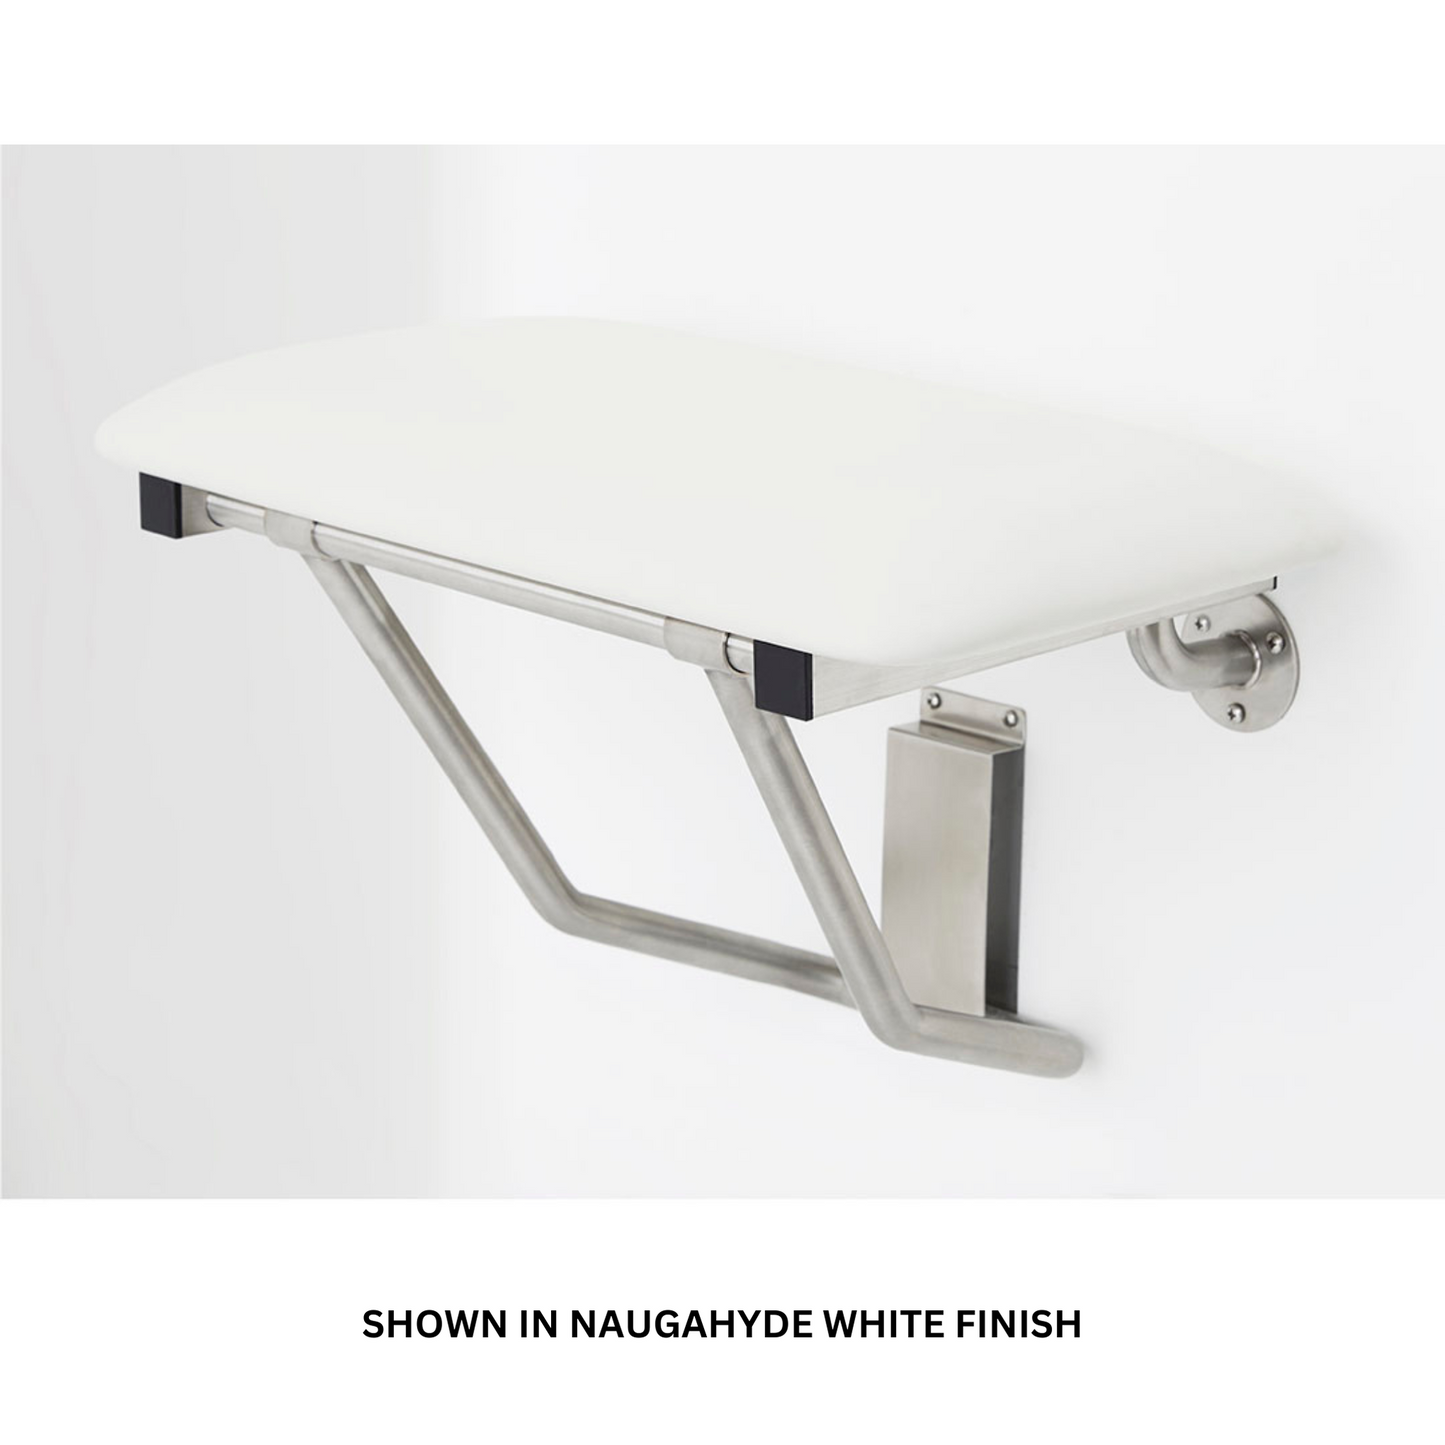 Seachrome Signature Series 24" W x 15" D Naugahyde Almond Cushion Seat Top Folding Wall Mount Bench Shower Seat